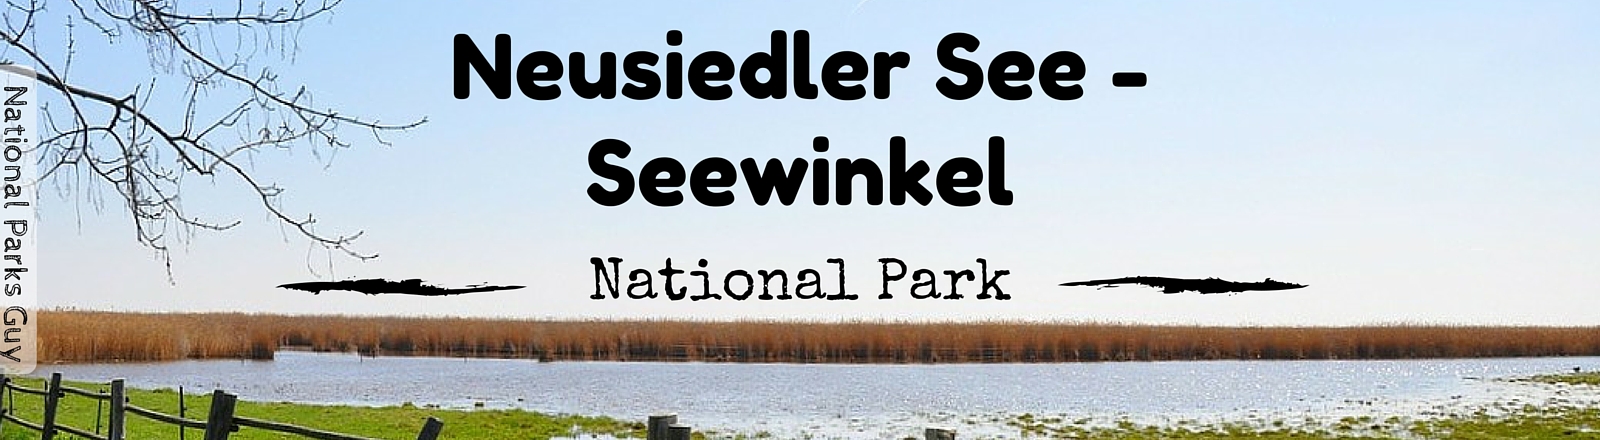 Neusiedler See - Seewinkel National Park, Austria, National Parks Guy